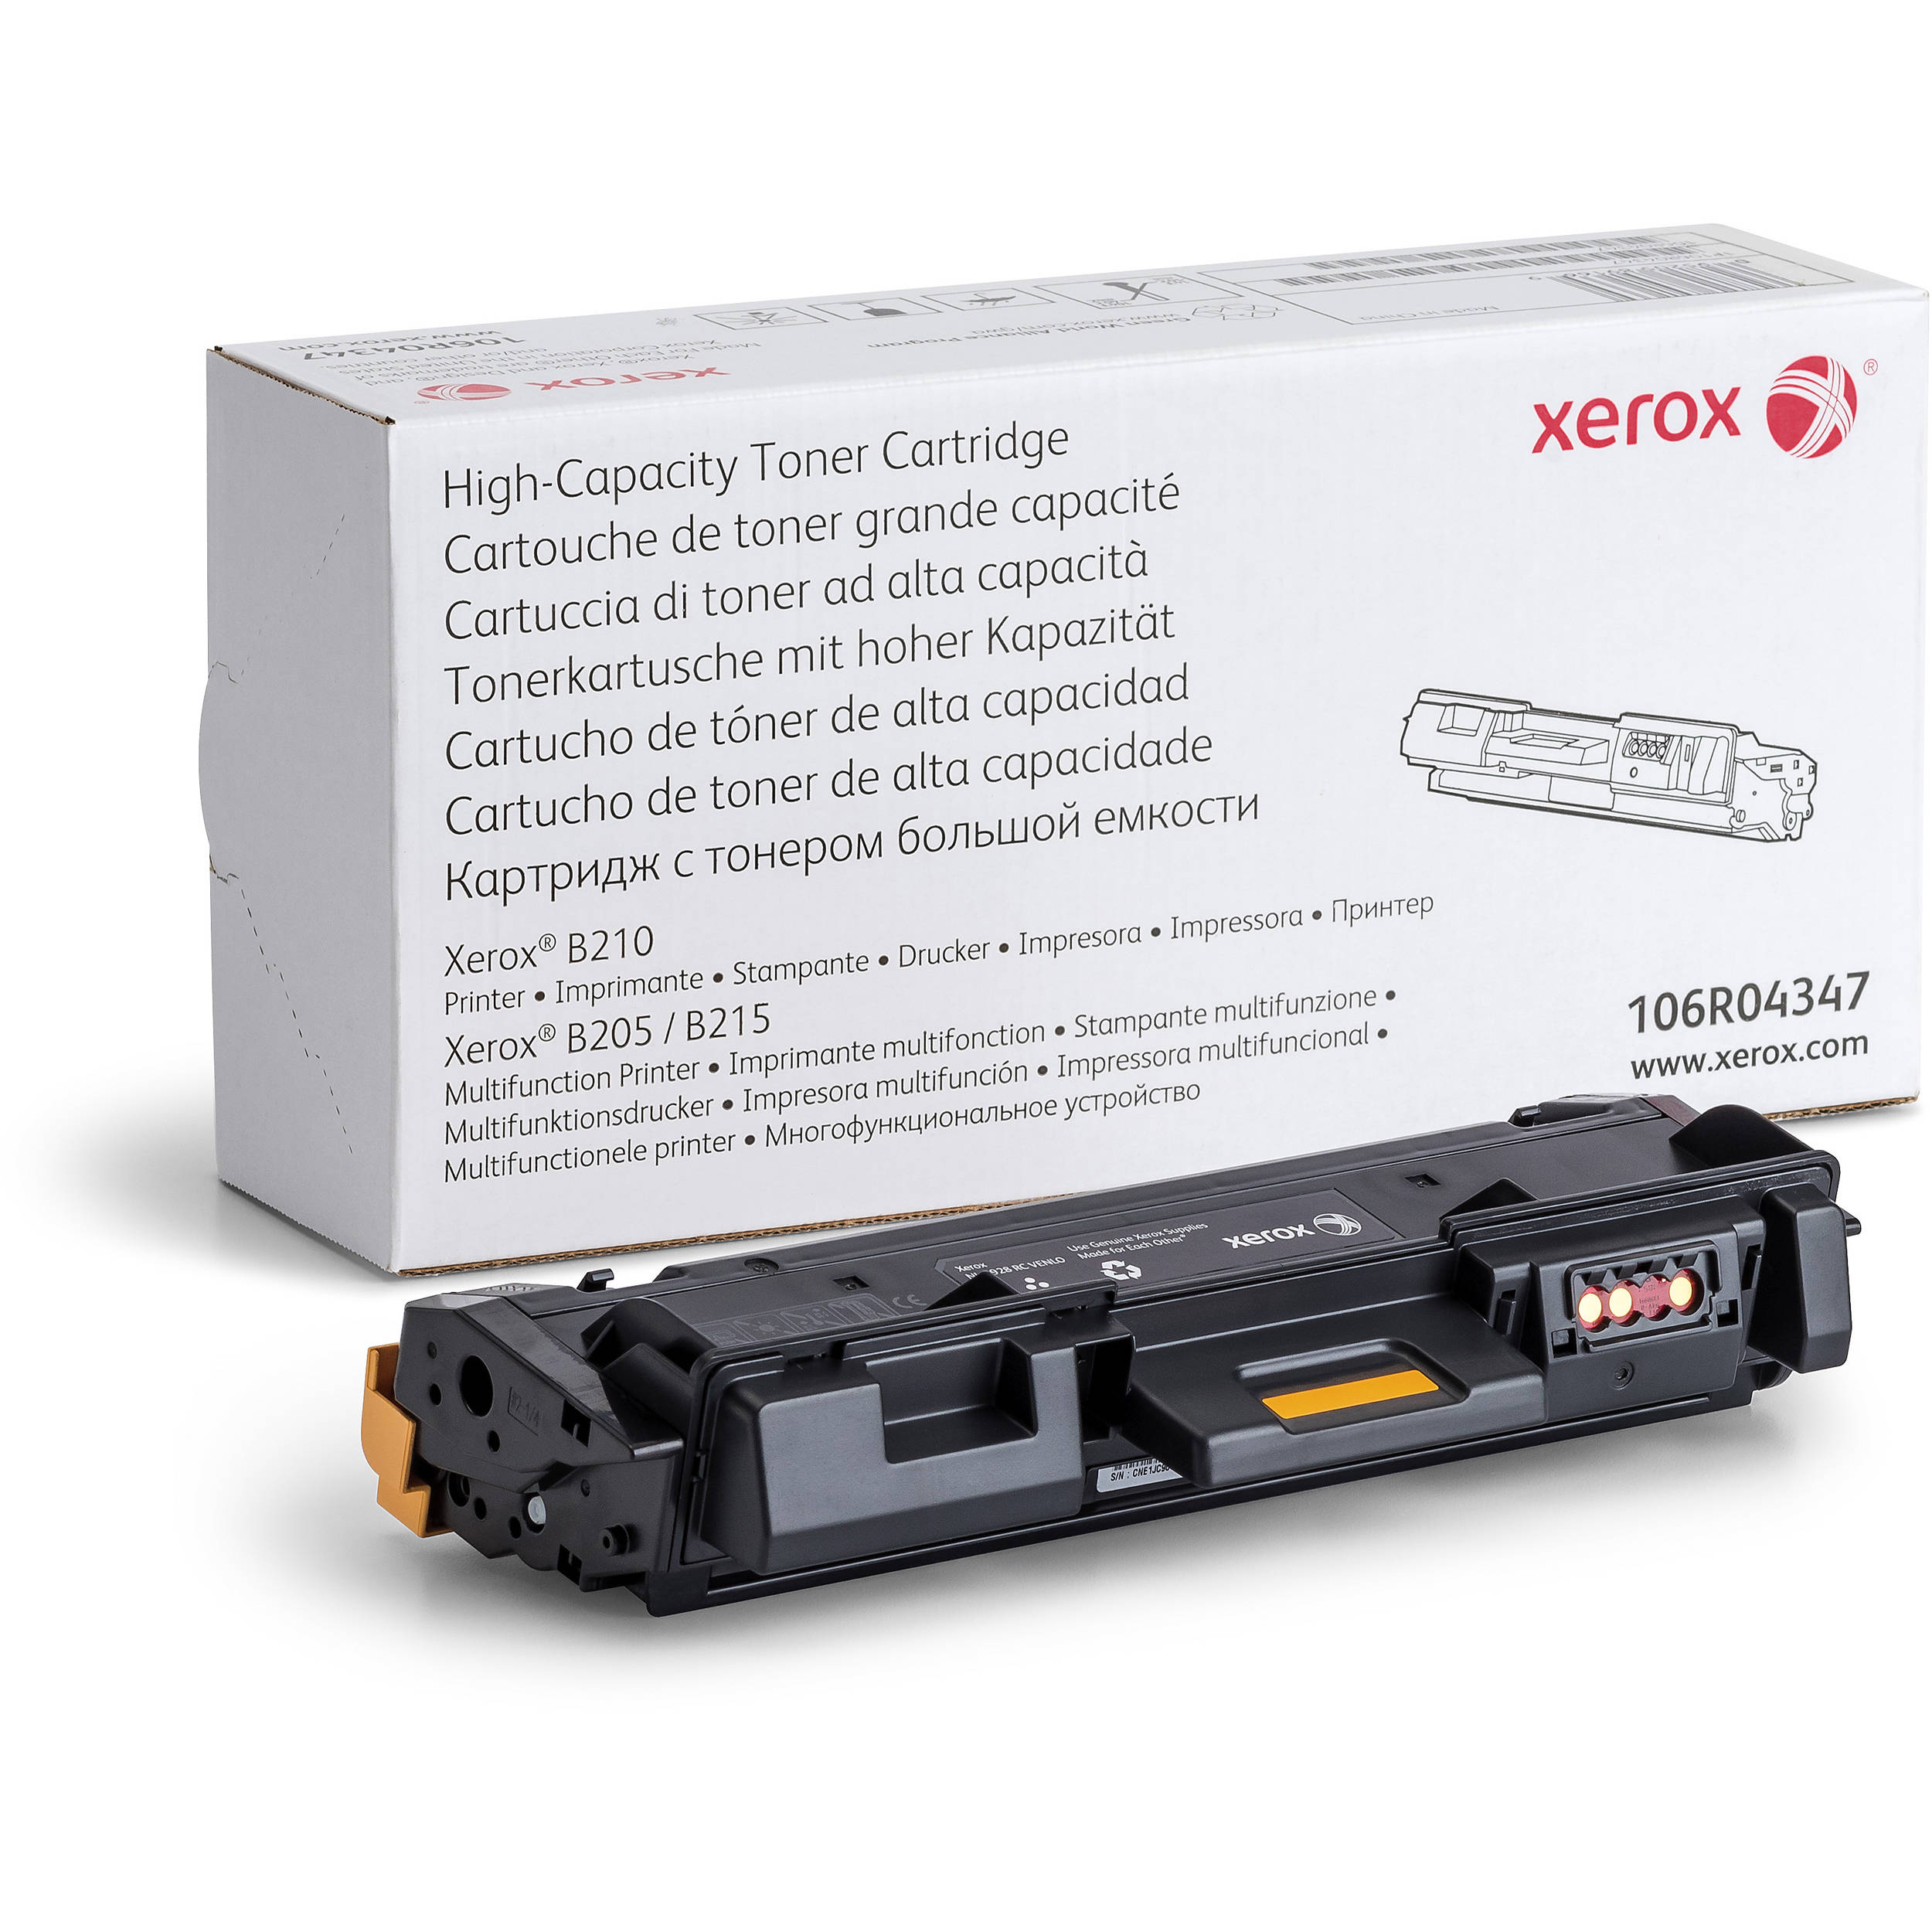 Xerox High-Capacity Black Toner Cartridge for B205/B210/B215 Laser Printers